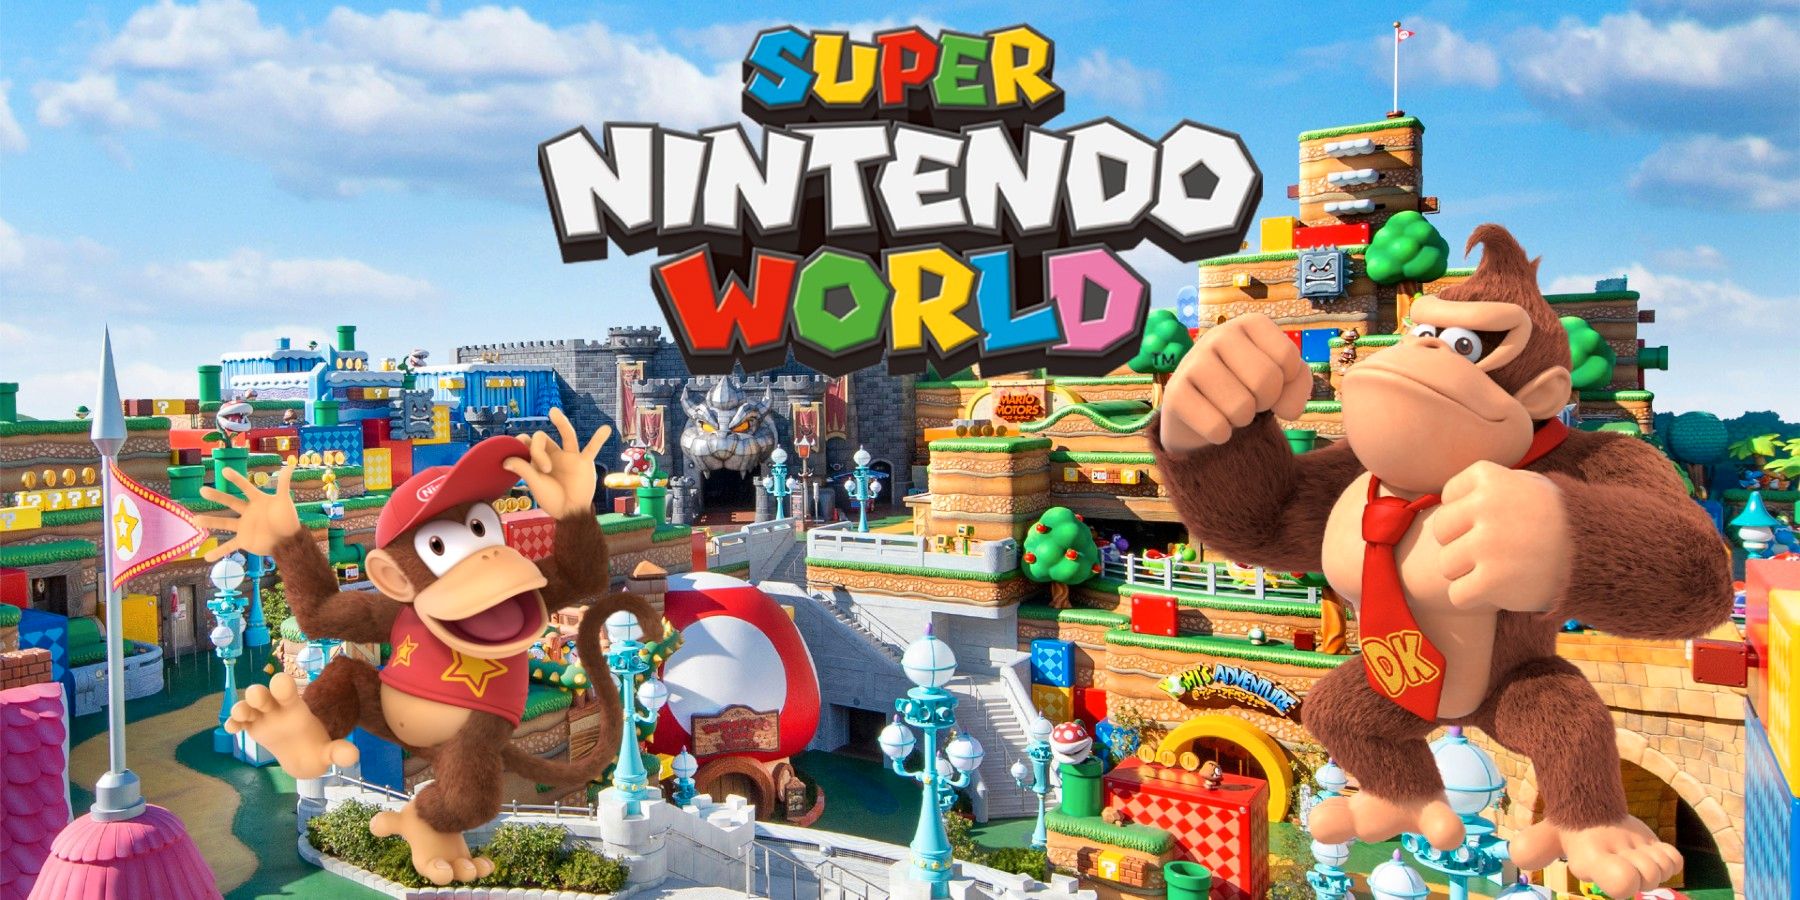 Super Nintendo World confirma la expansión de Donkey Kong